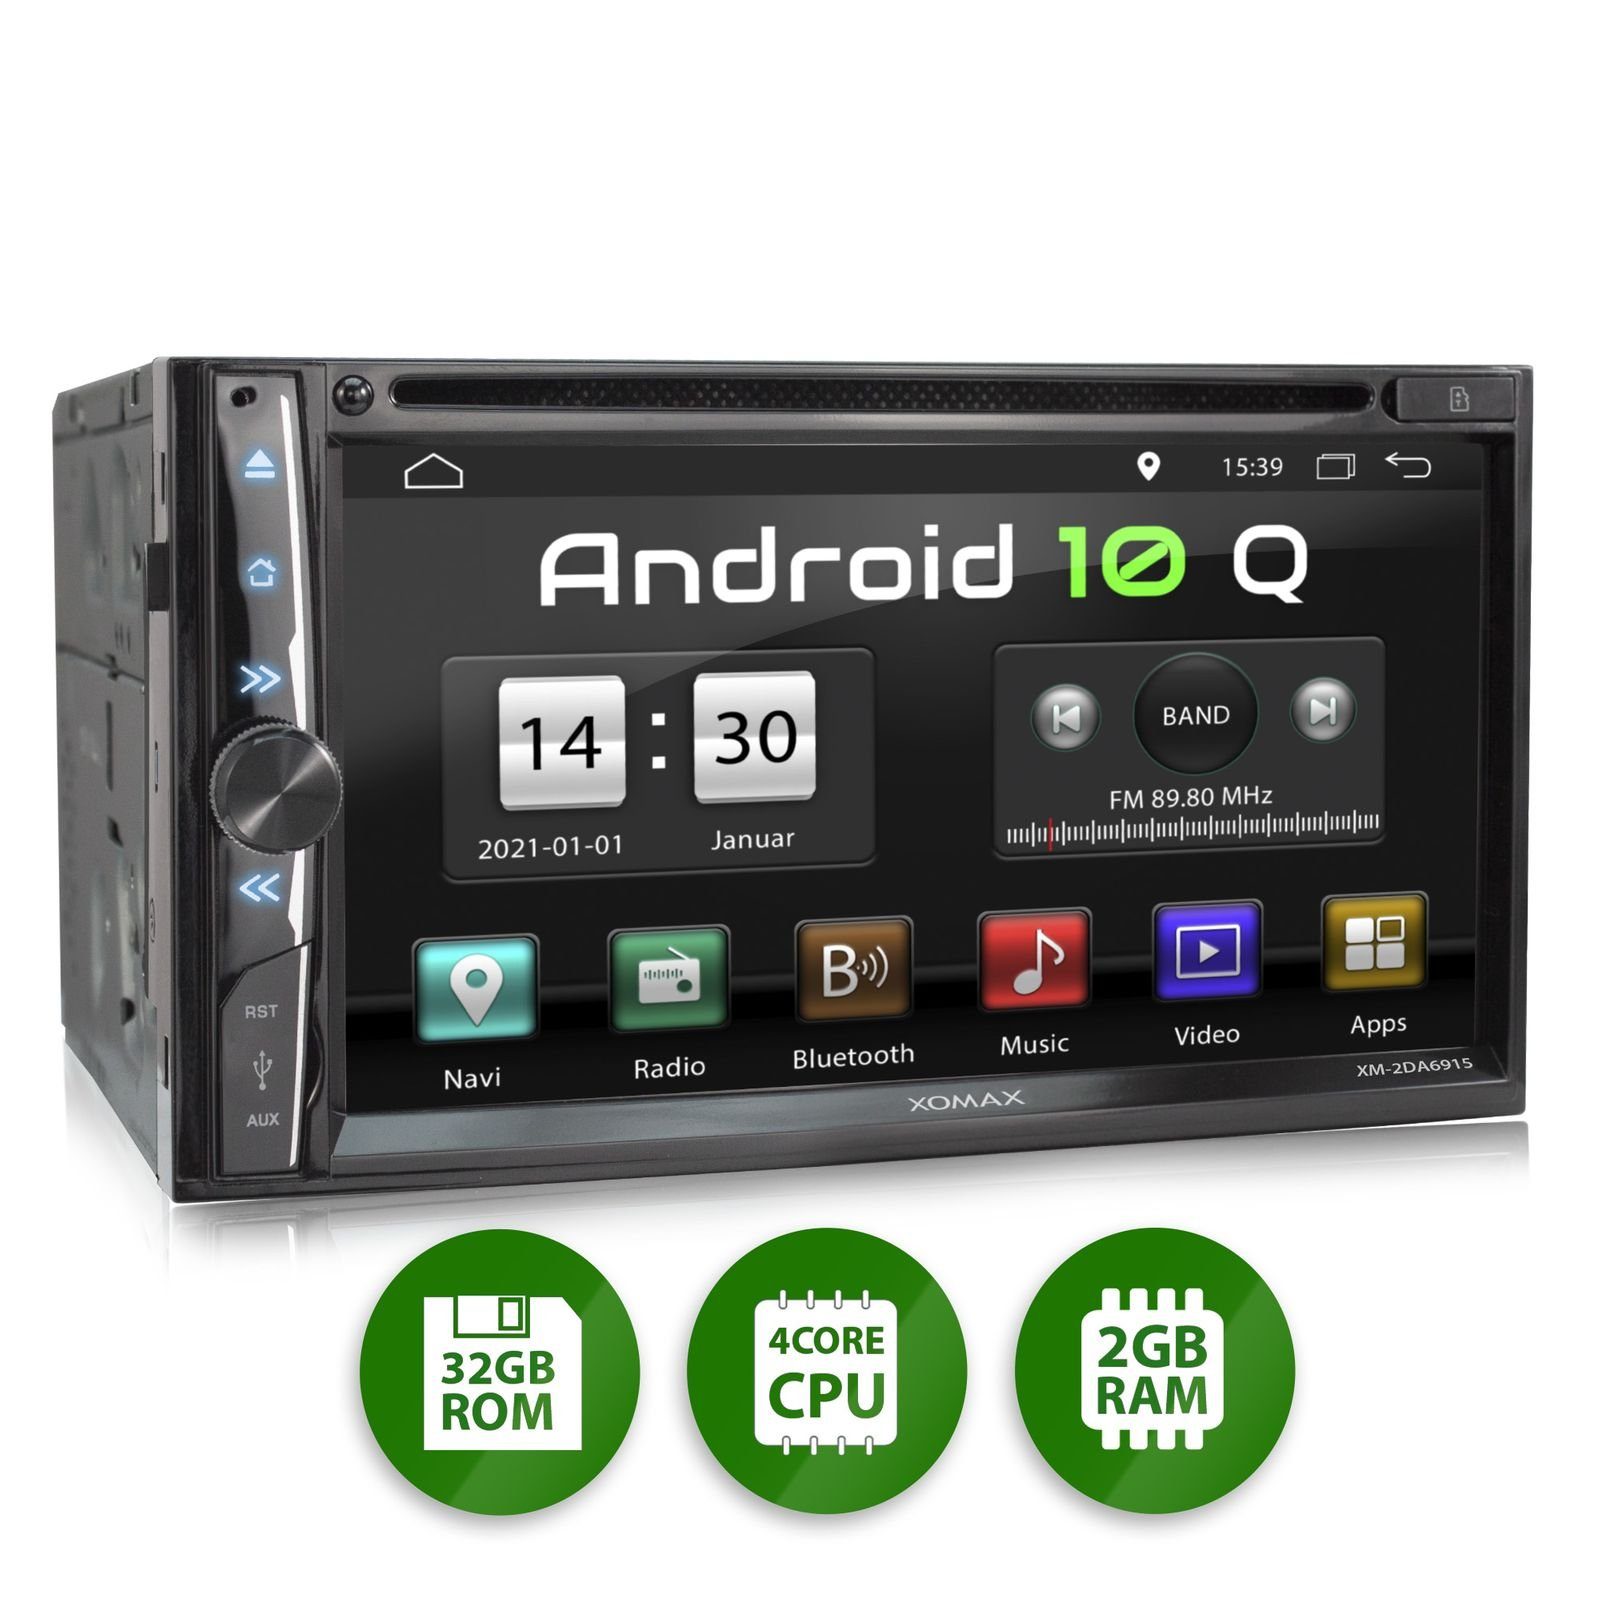 XOMAX Autoradio (XOMAX XM-2DA6915: 2DIN Autoradio mit Android 10 Navi 6,9  Zoll Capacitive Touchscreen Monitor, Bluetooth, SD, USB, DVD, CD) online  kaufen | OTTO